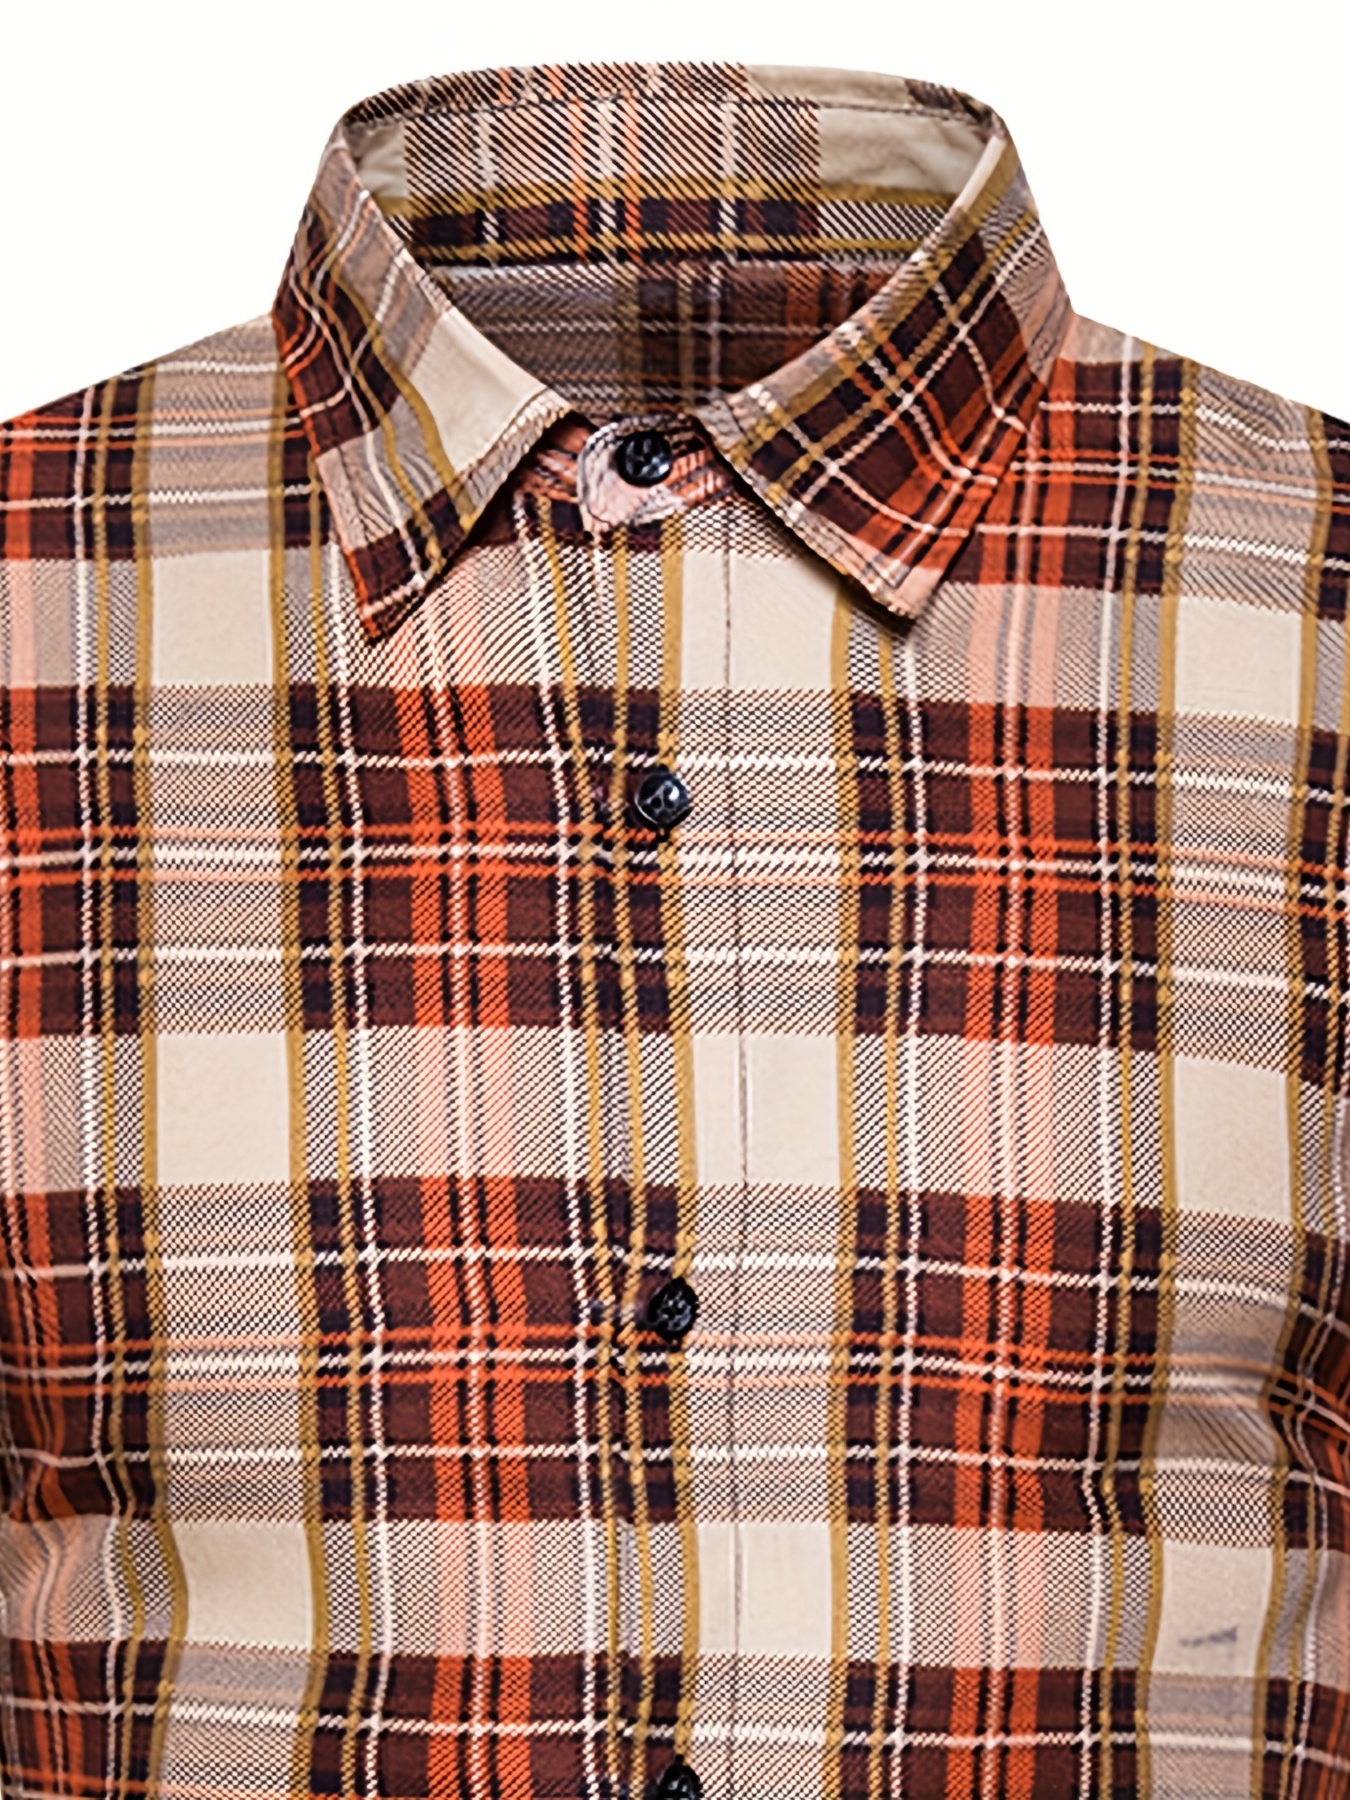 Plaid Print Men's Casual Button Up Long Sleeve Shirt, Men's